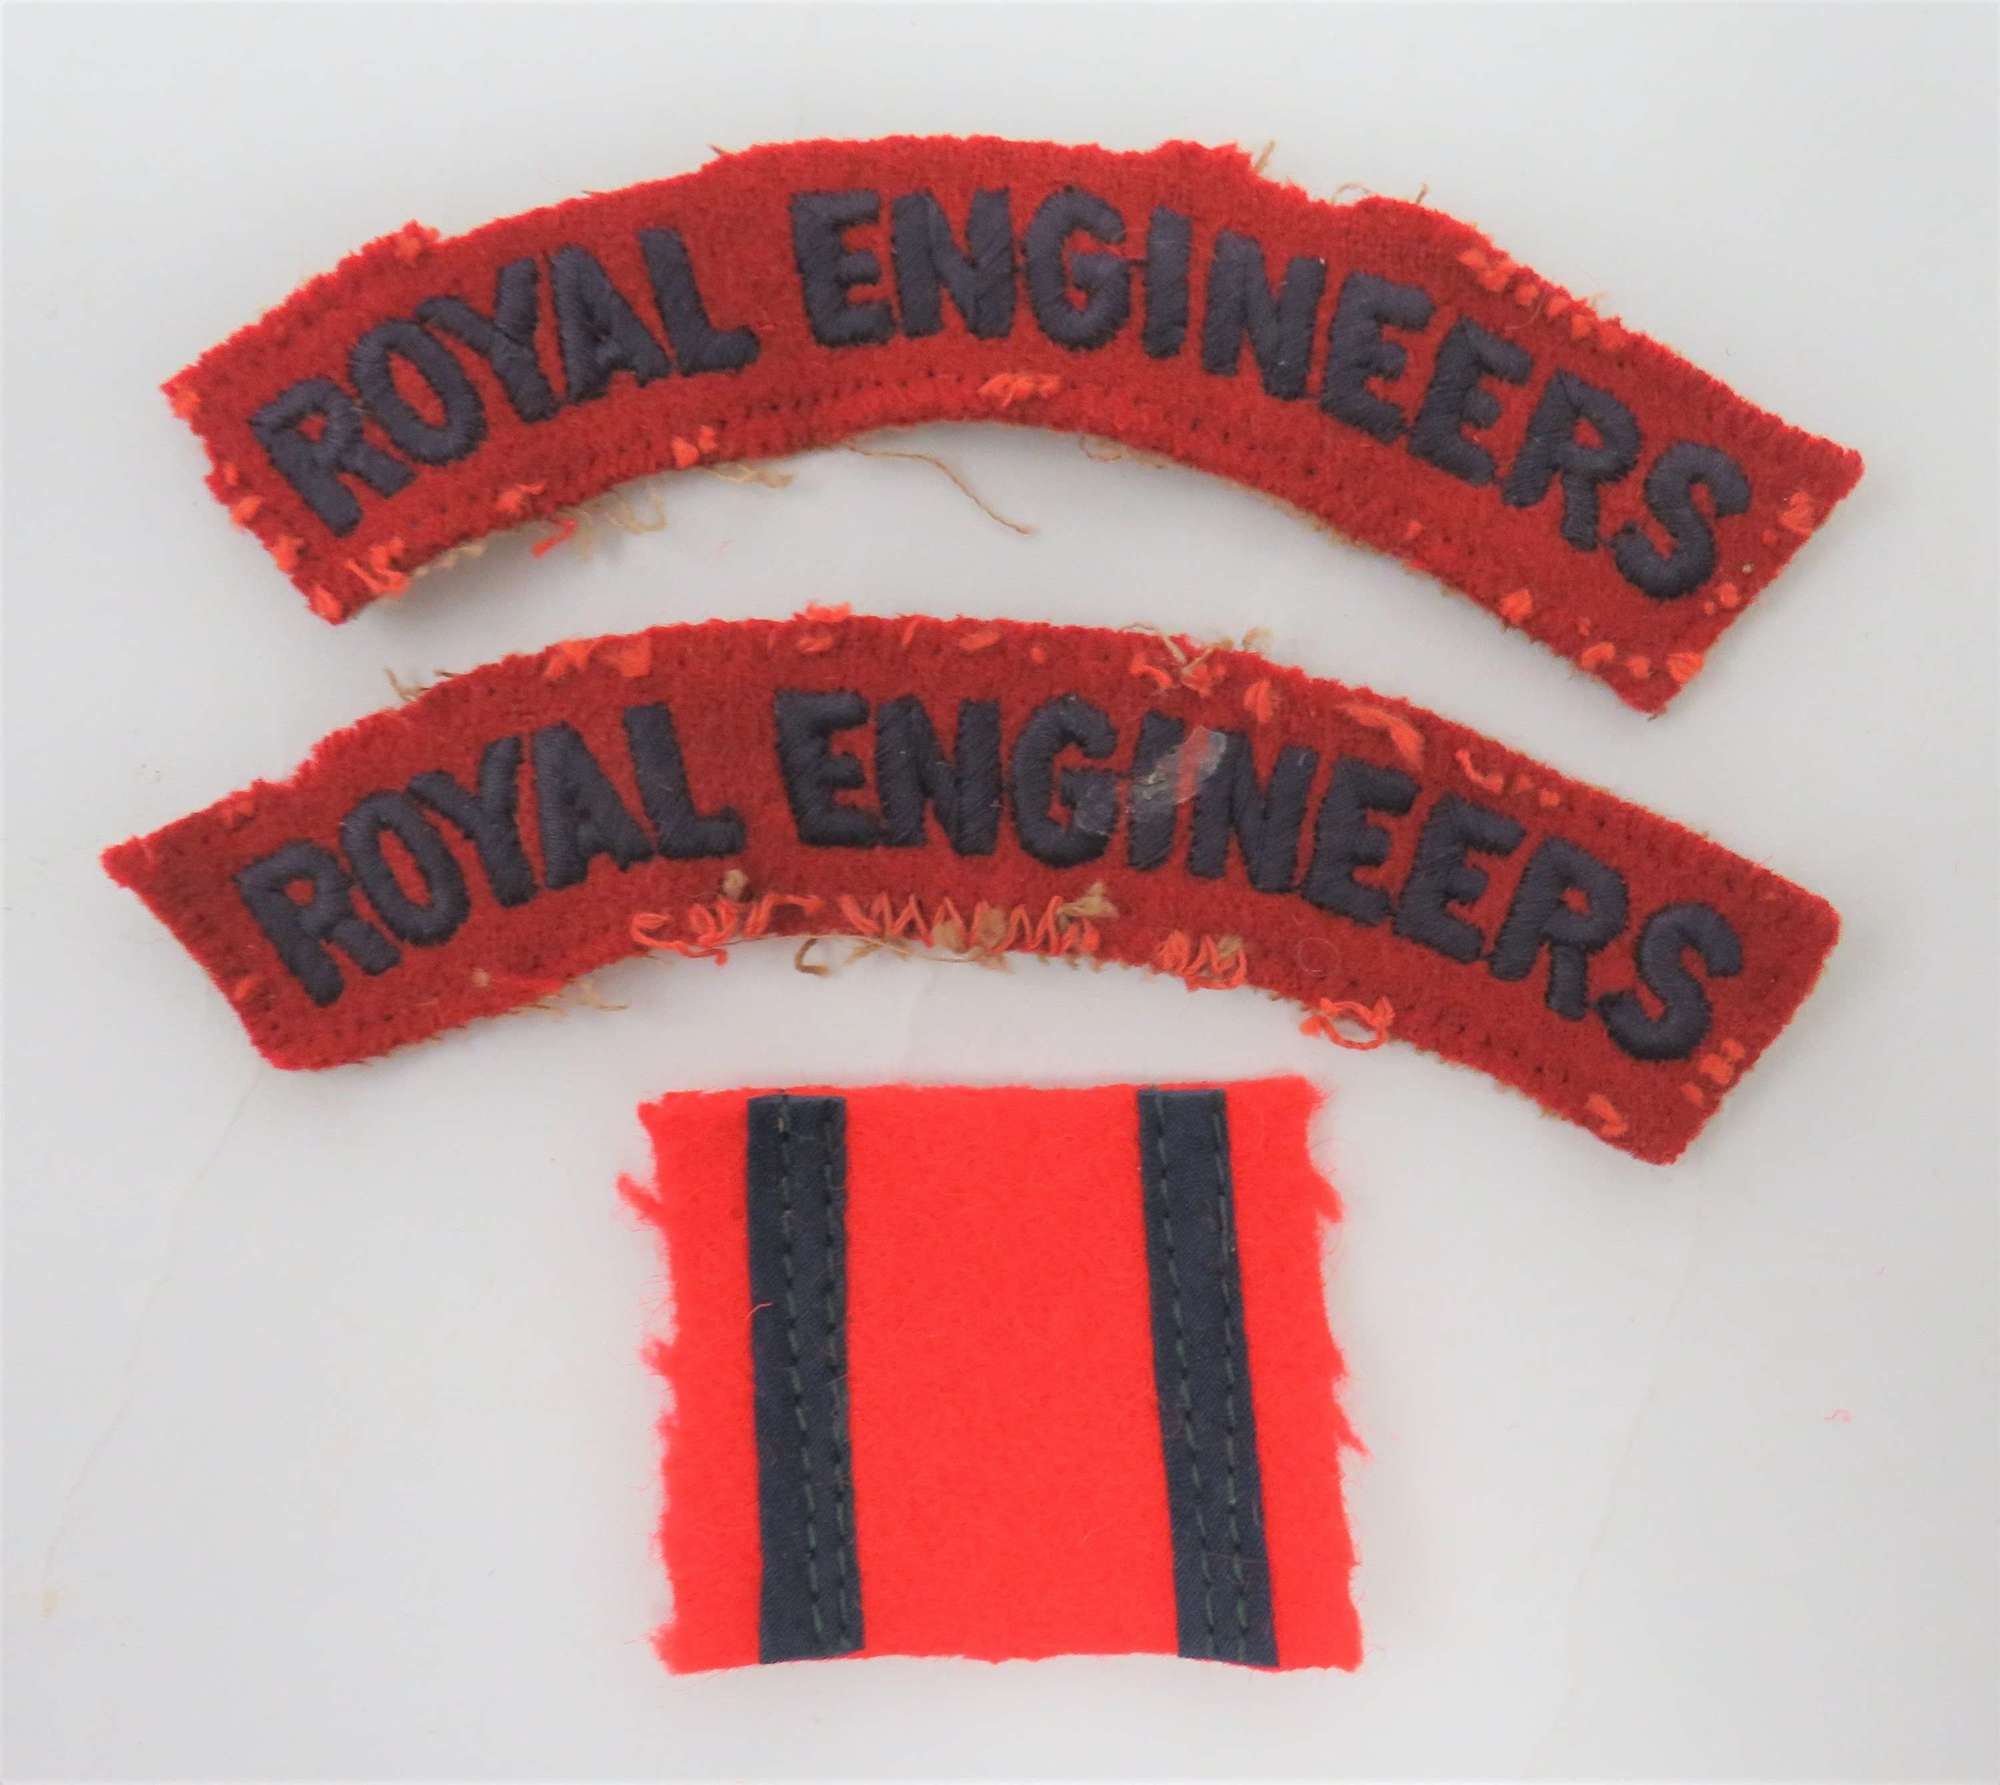 WW2 Royal Engineers Pagri Badge and Titles